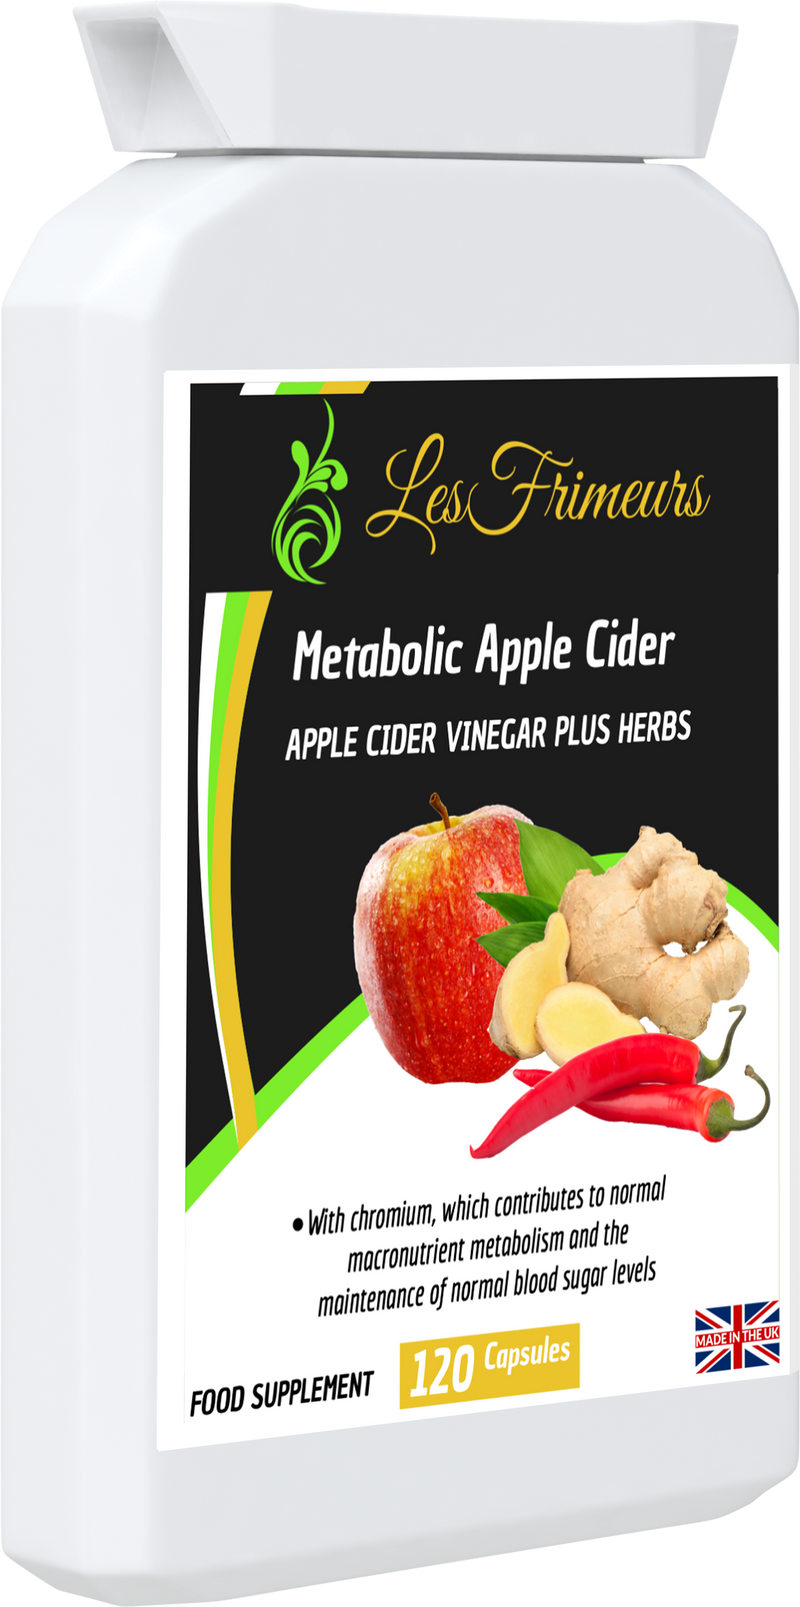 Metabolic Apple Cider